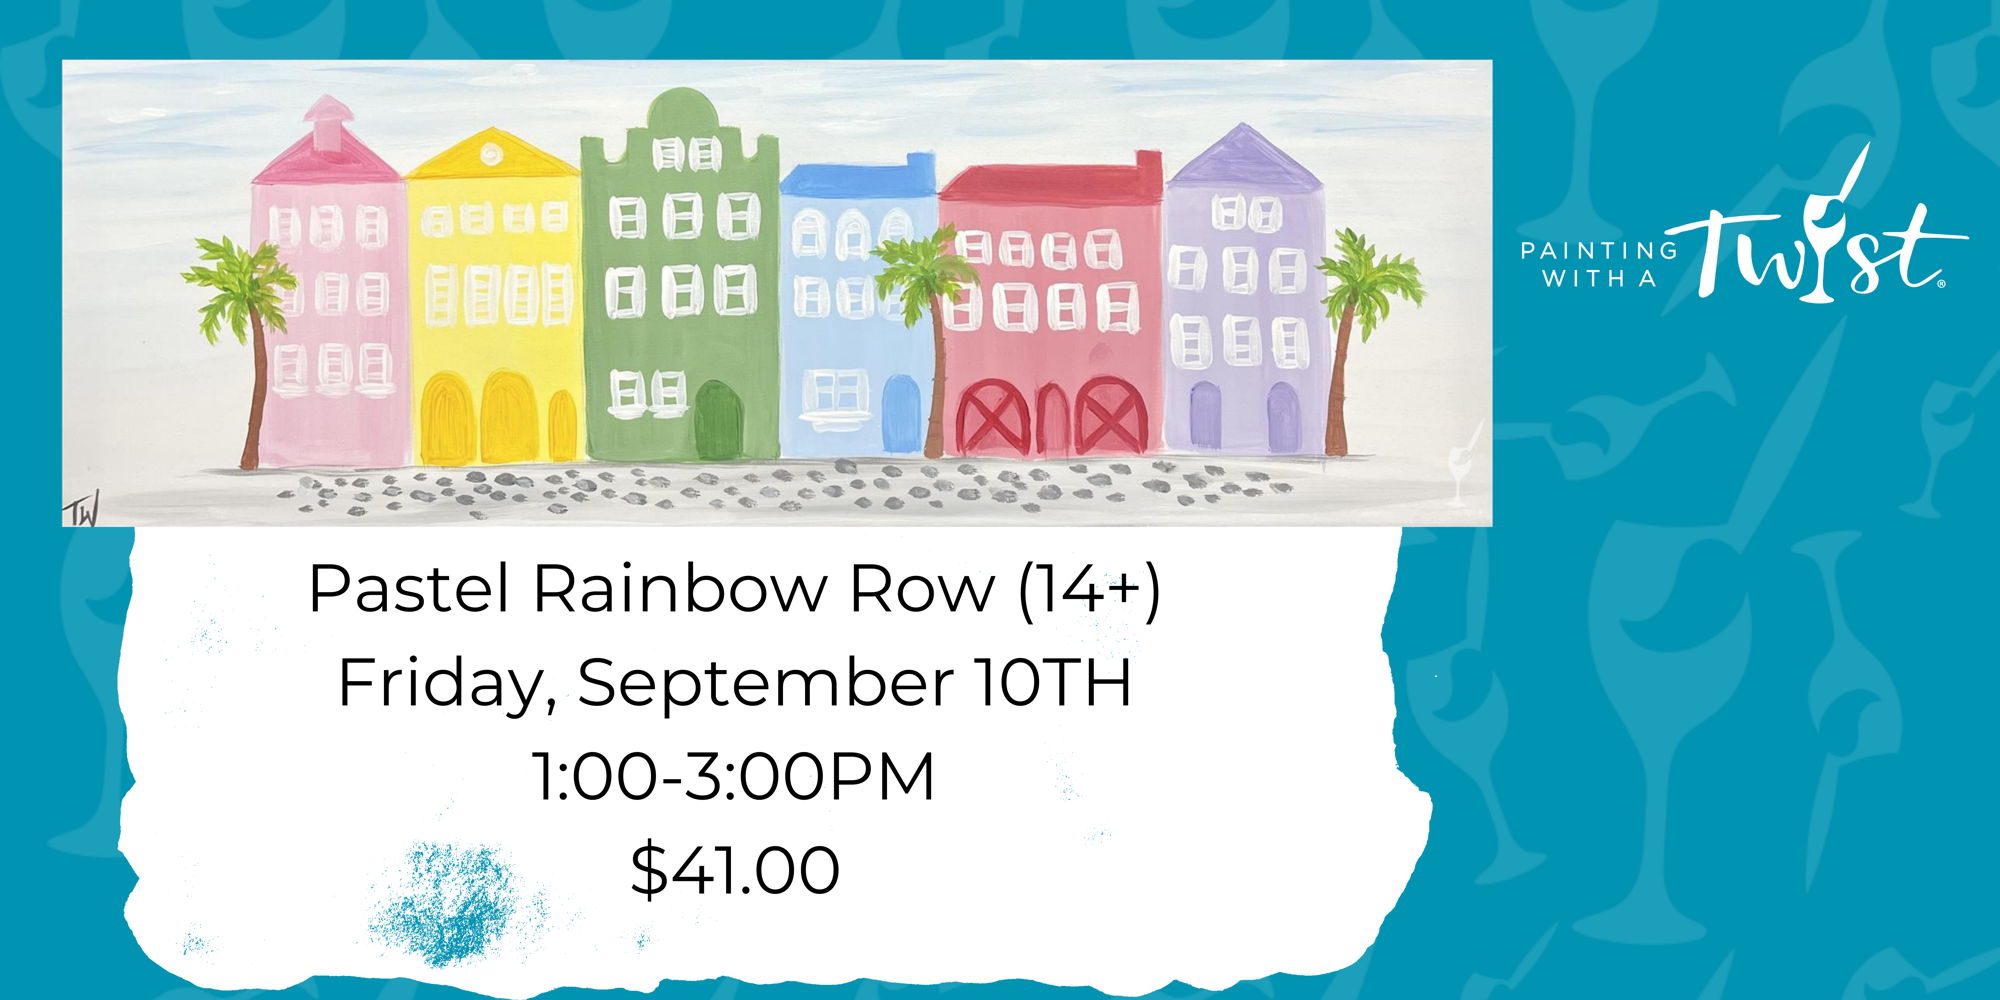 Pastel Rainbow Row (14+) promotional image